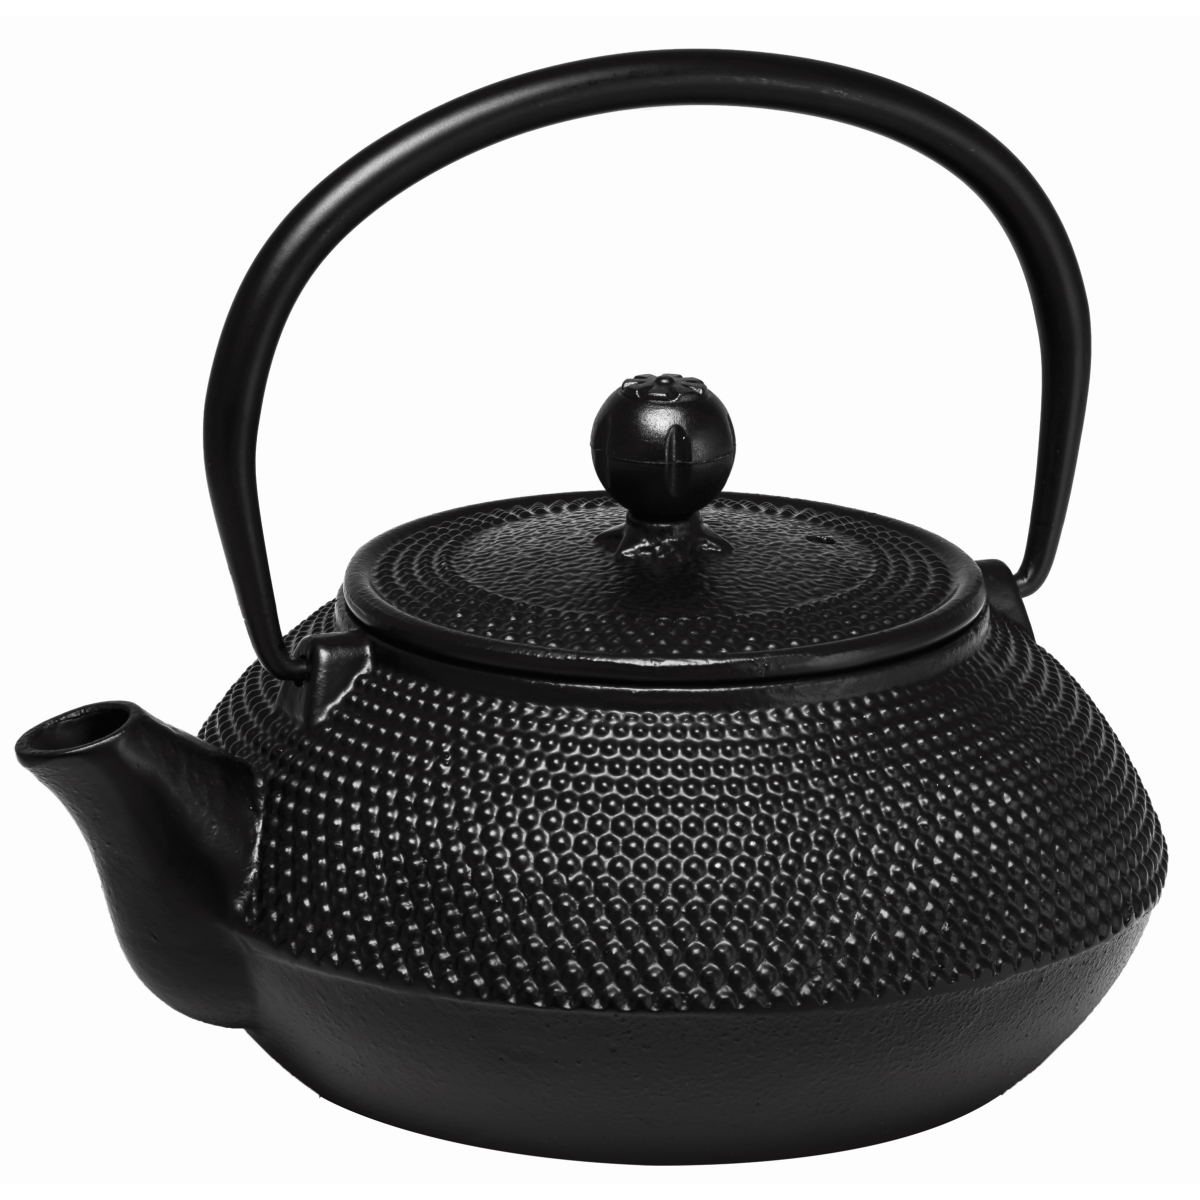 Avanti Hobnall Cast Iron Teapot -800ml